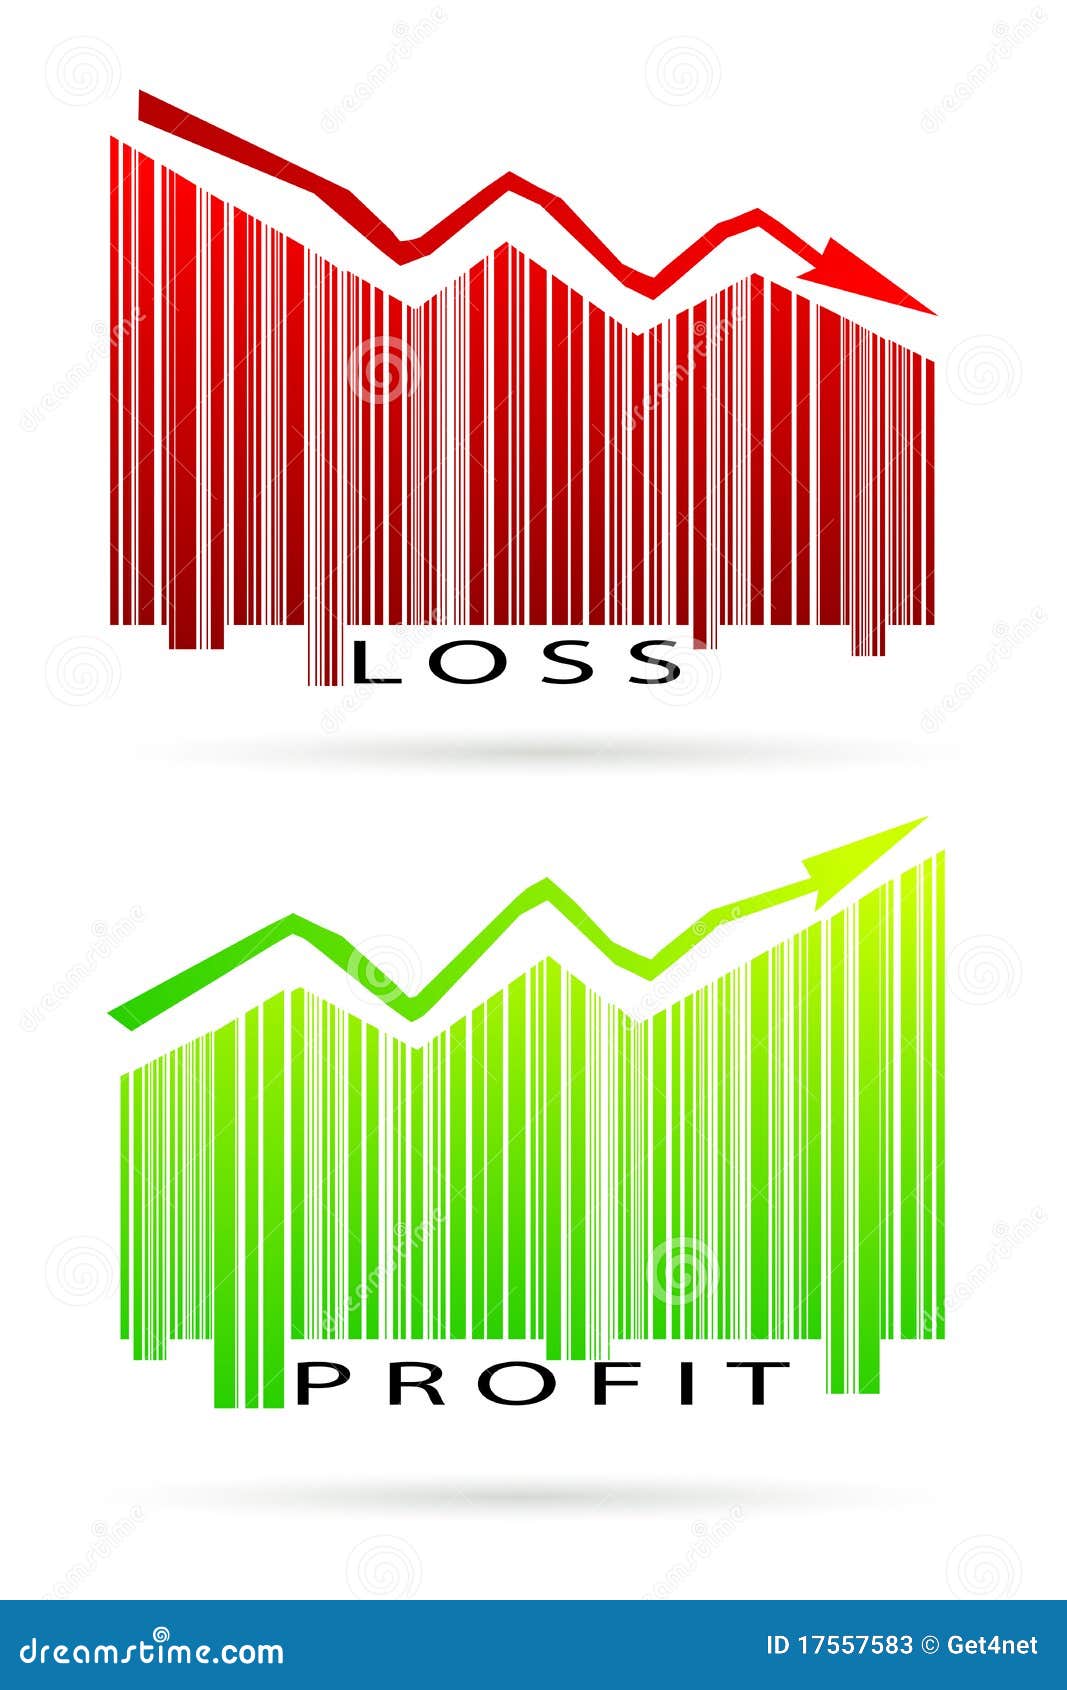 profit and loss graph